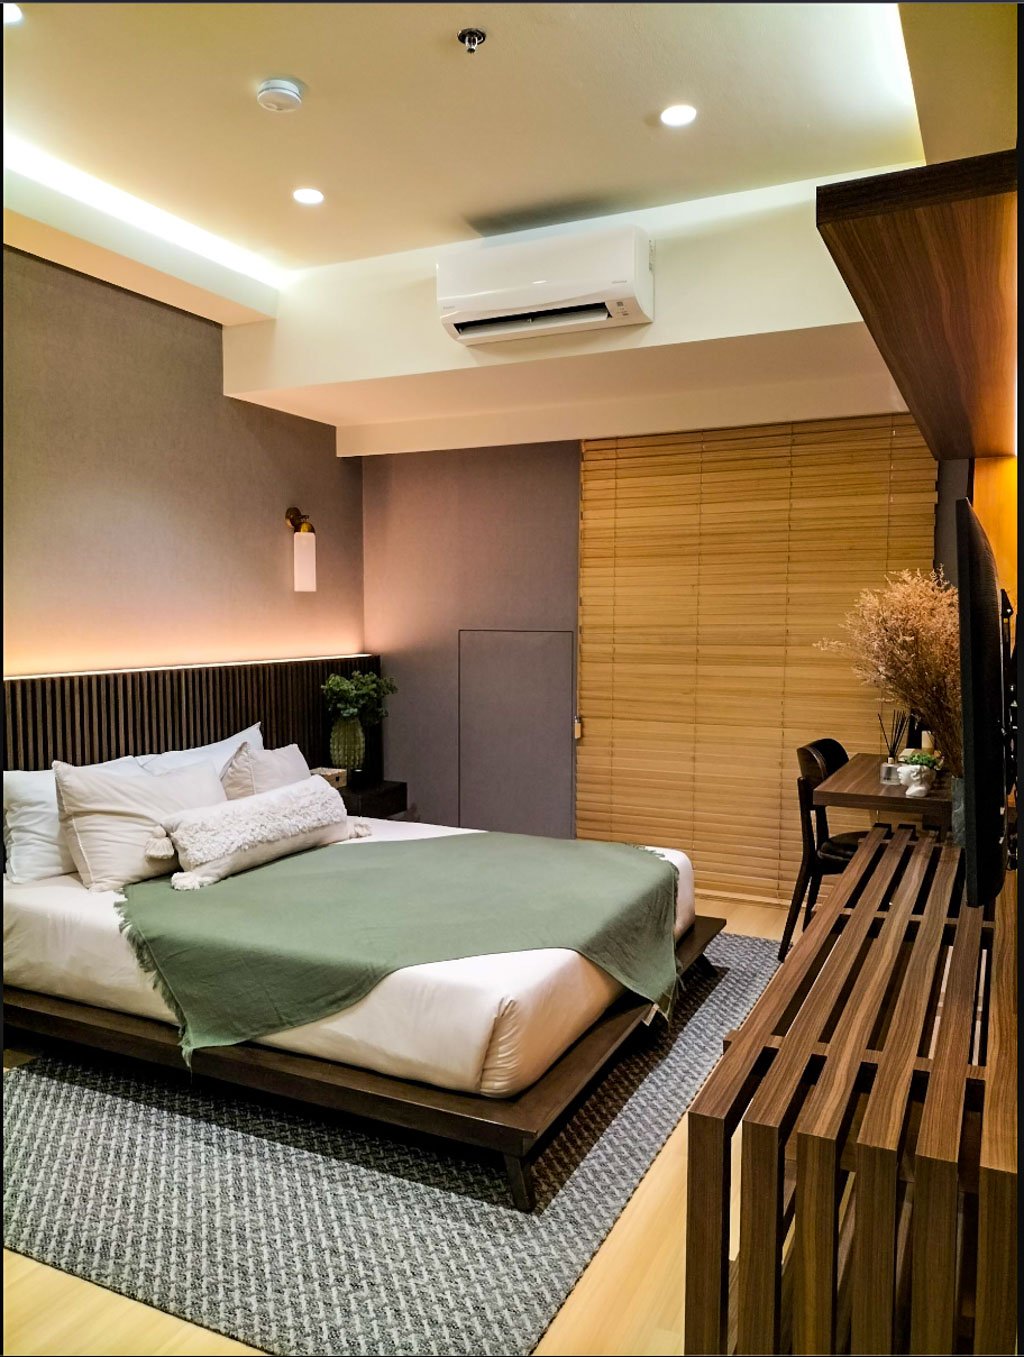 SRD60A3 2 Bedroom Condo for Sale in Cebu Business Park - 7